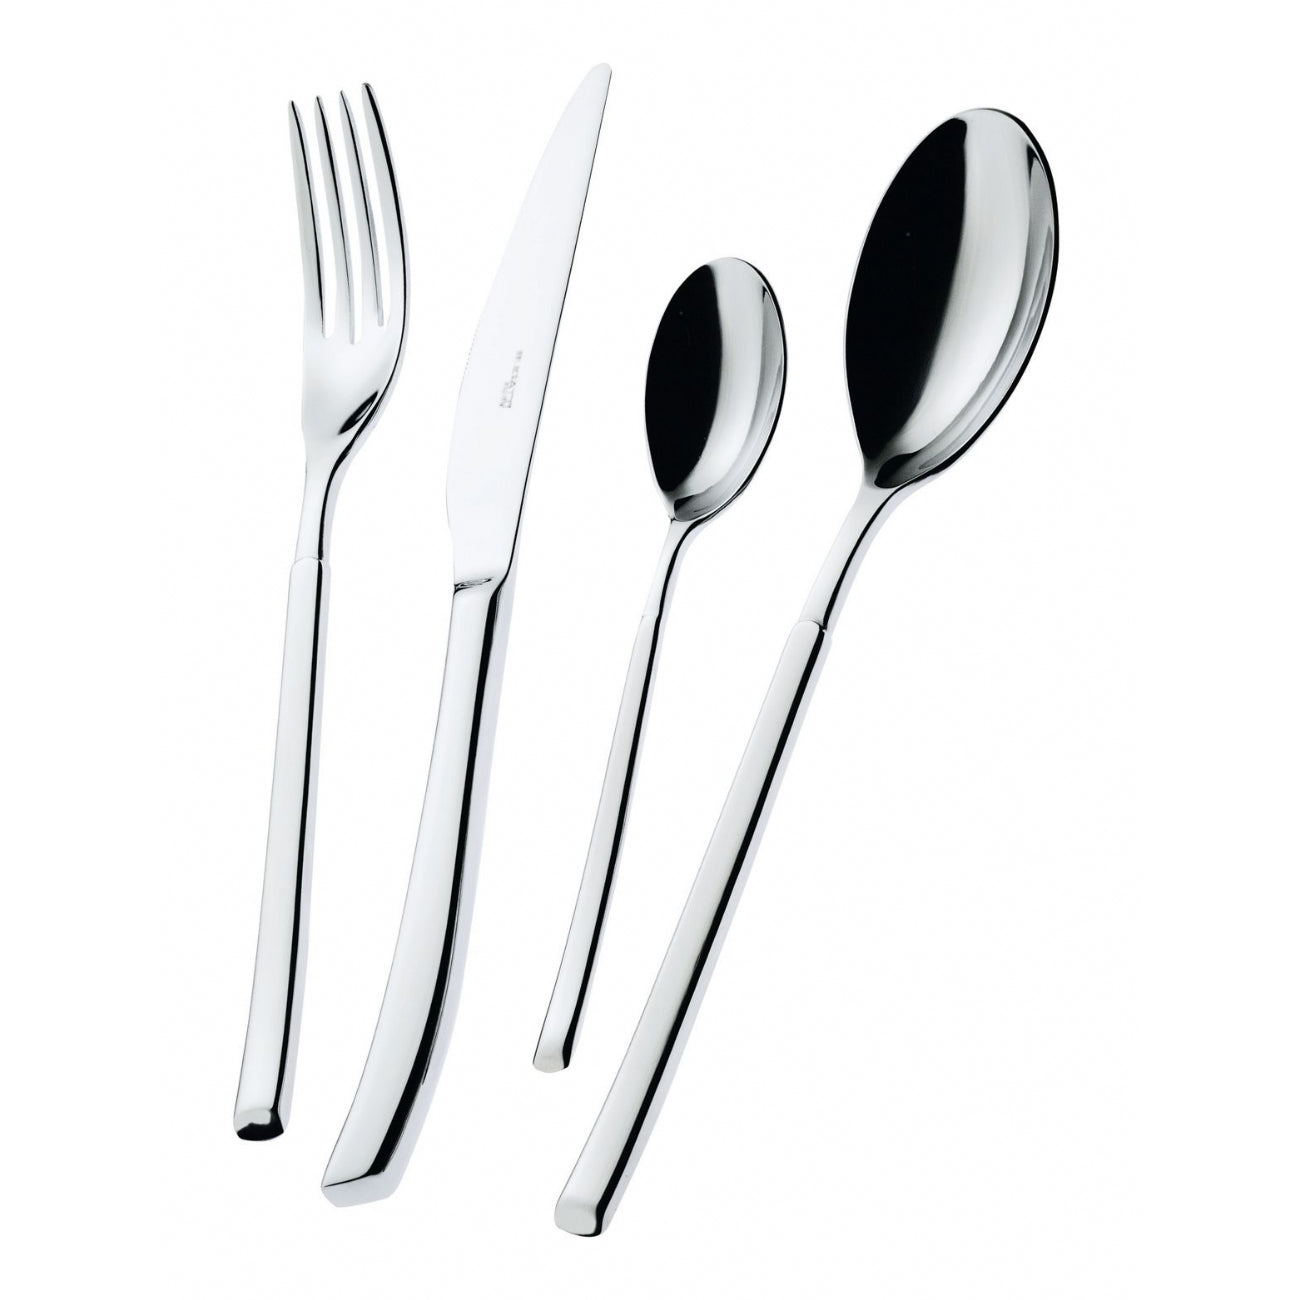 BUGATTI, Portofino 75-piece cutlery set in 18/10 stainless steel